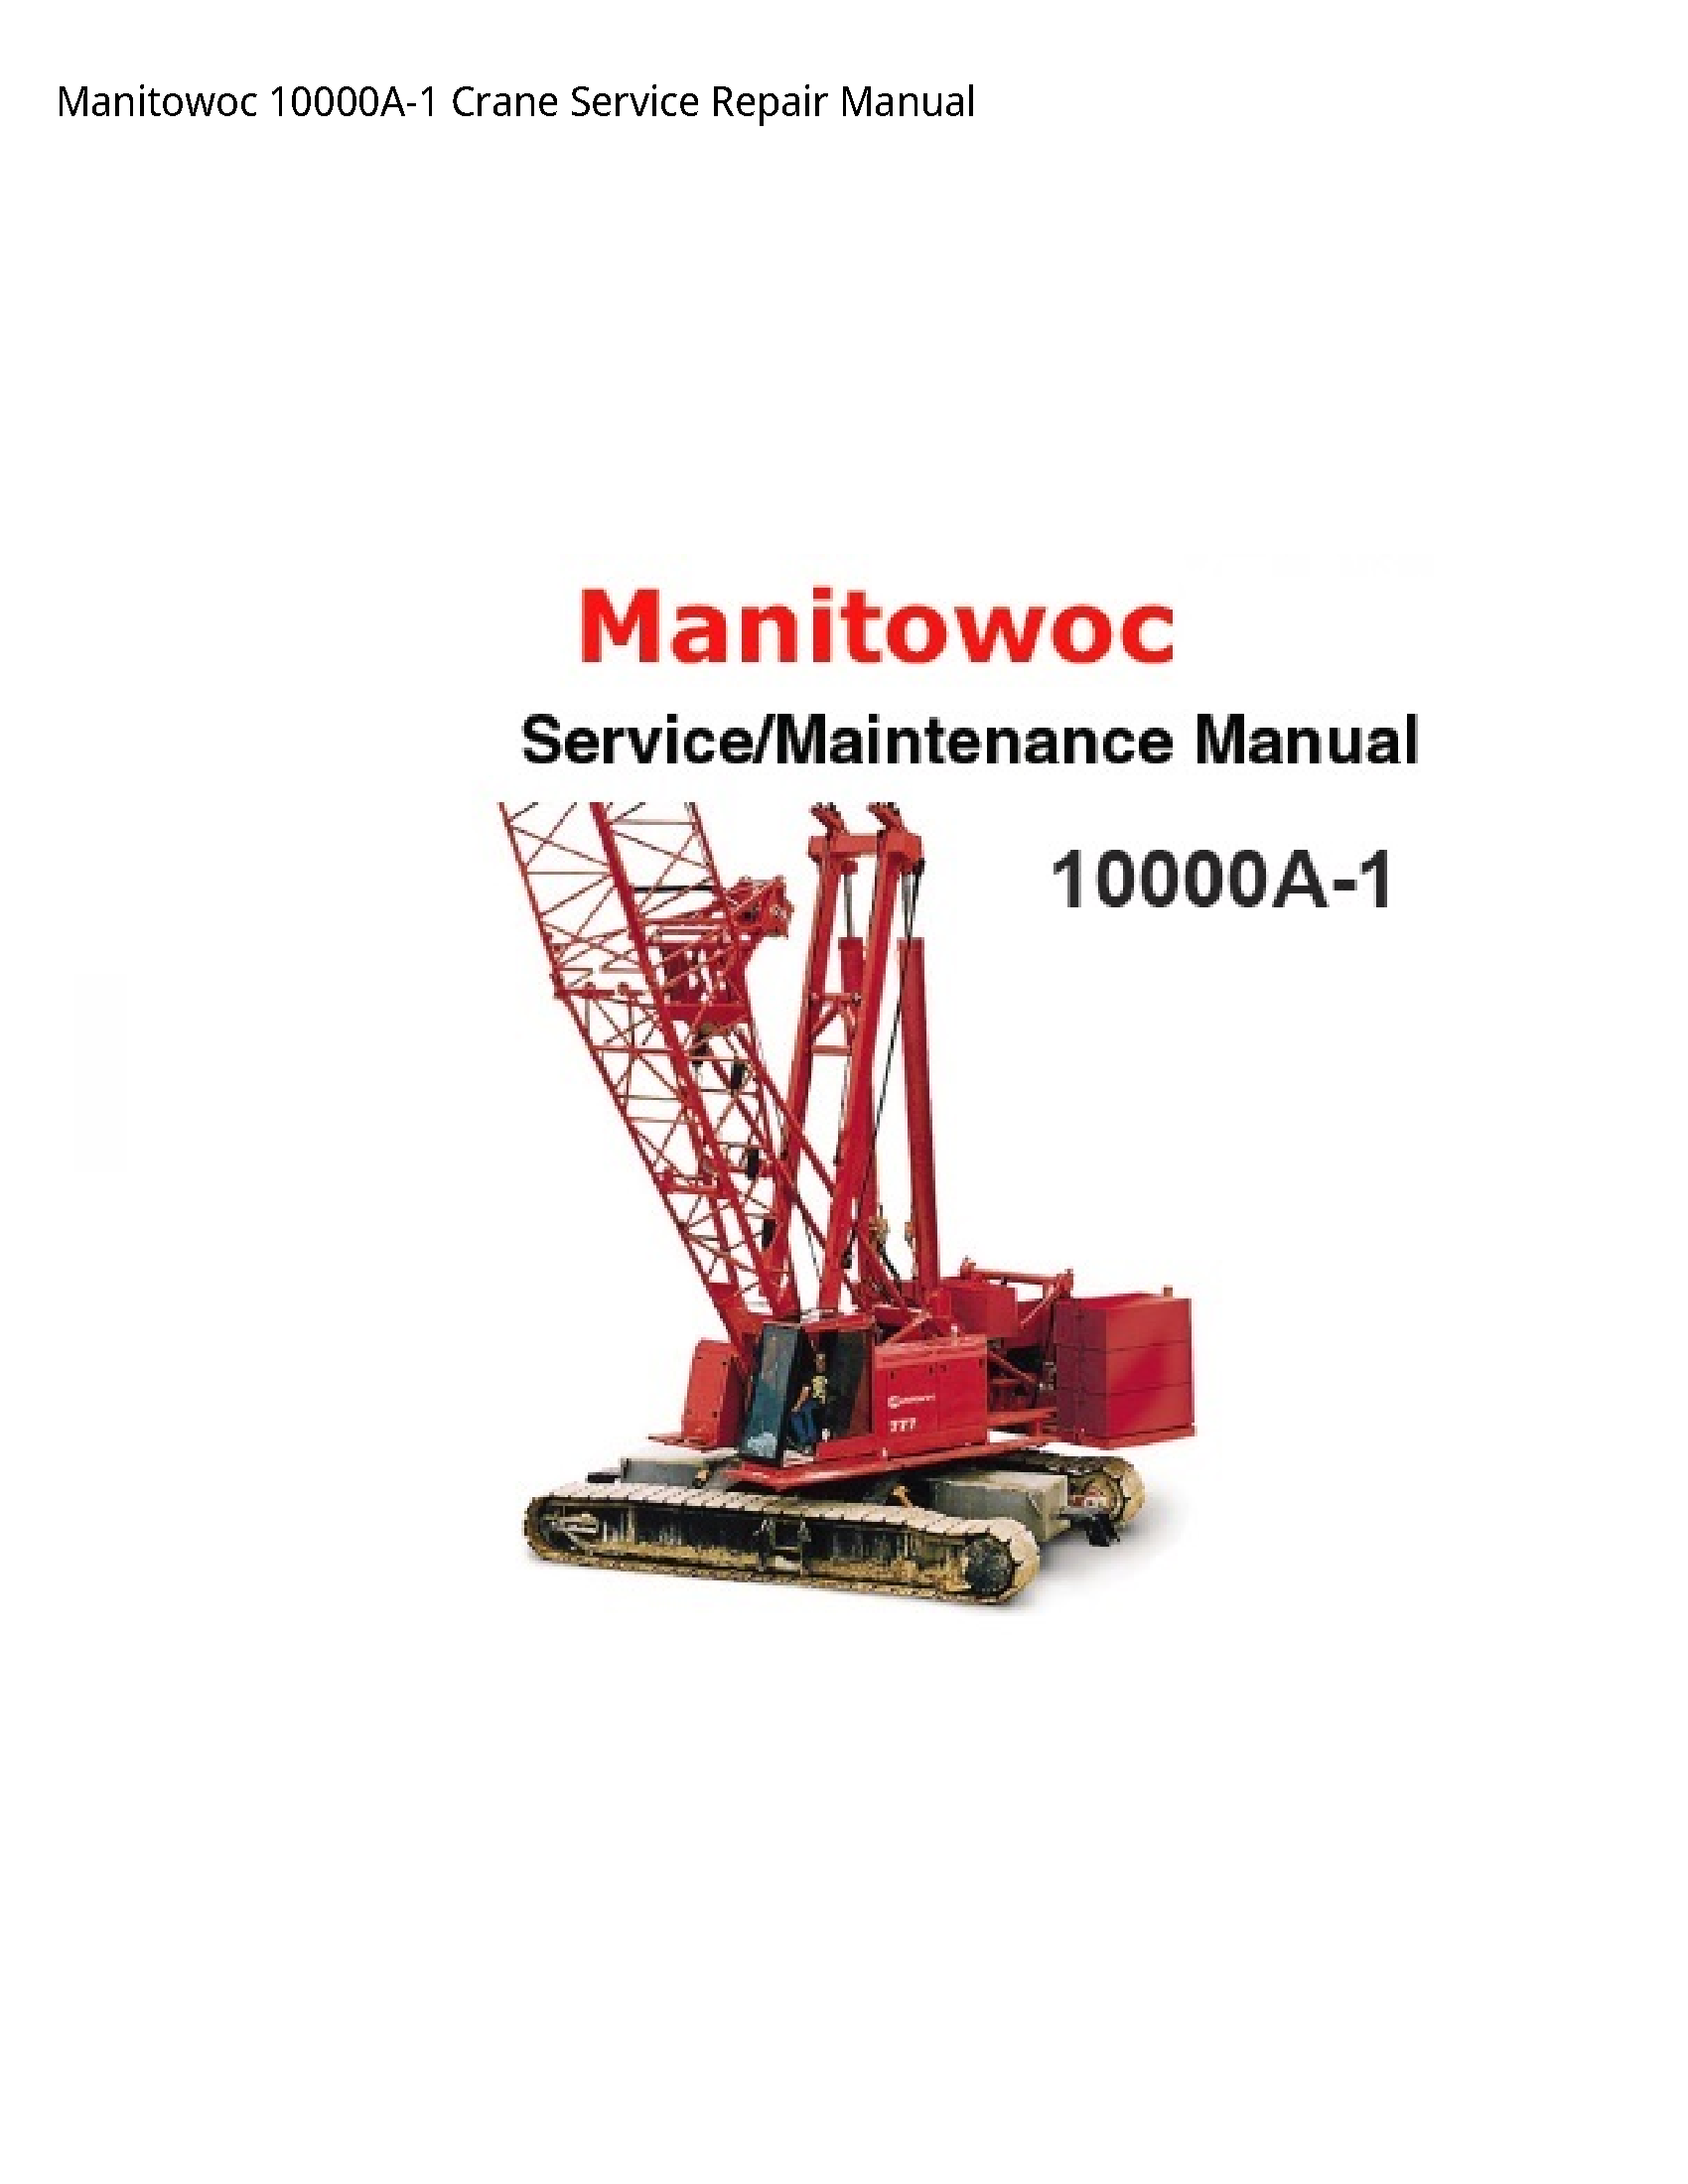 Manitowoc 10000A-1 Crane manual